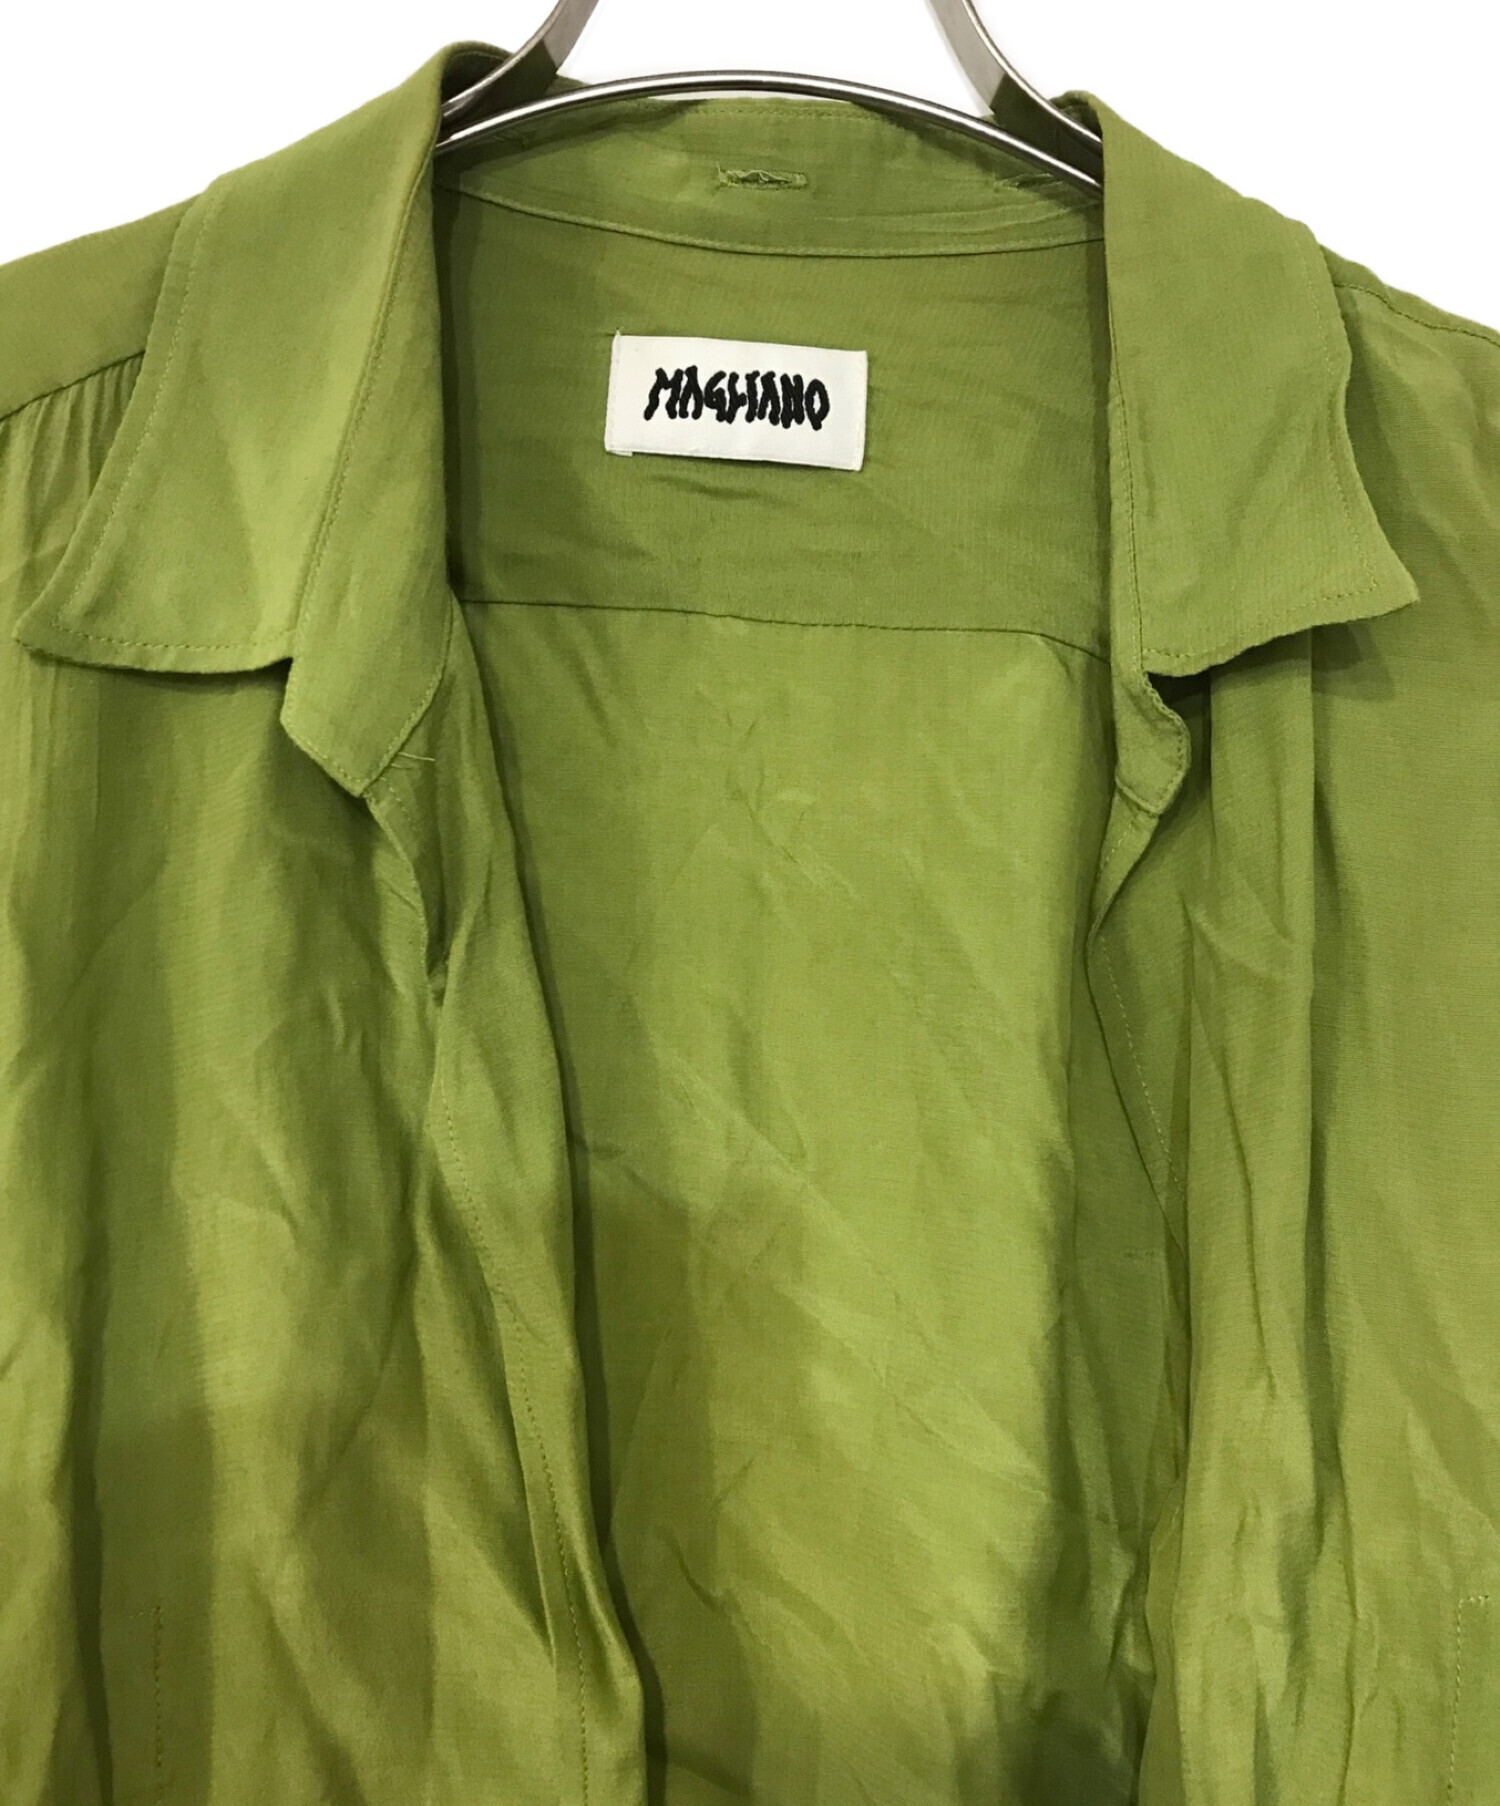 MAGLIANO (マリアーノ) オーバーサイズプルオーバー長袖シャツ 黄緑 サイズ:S